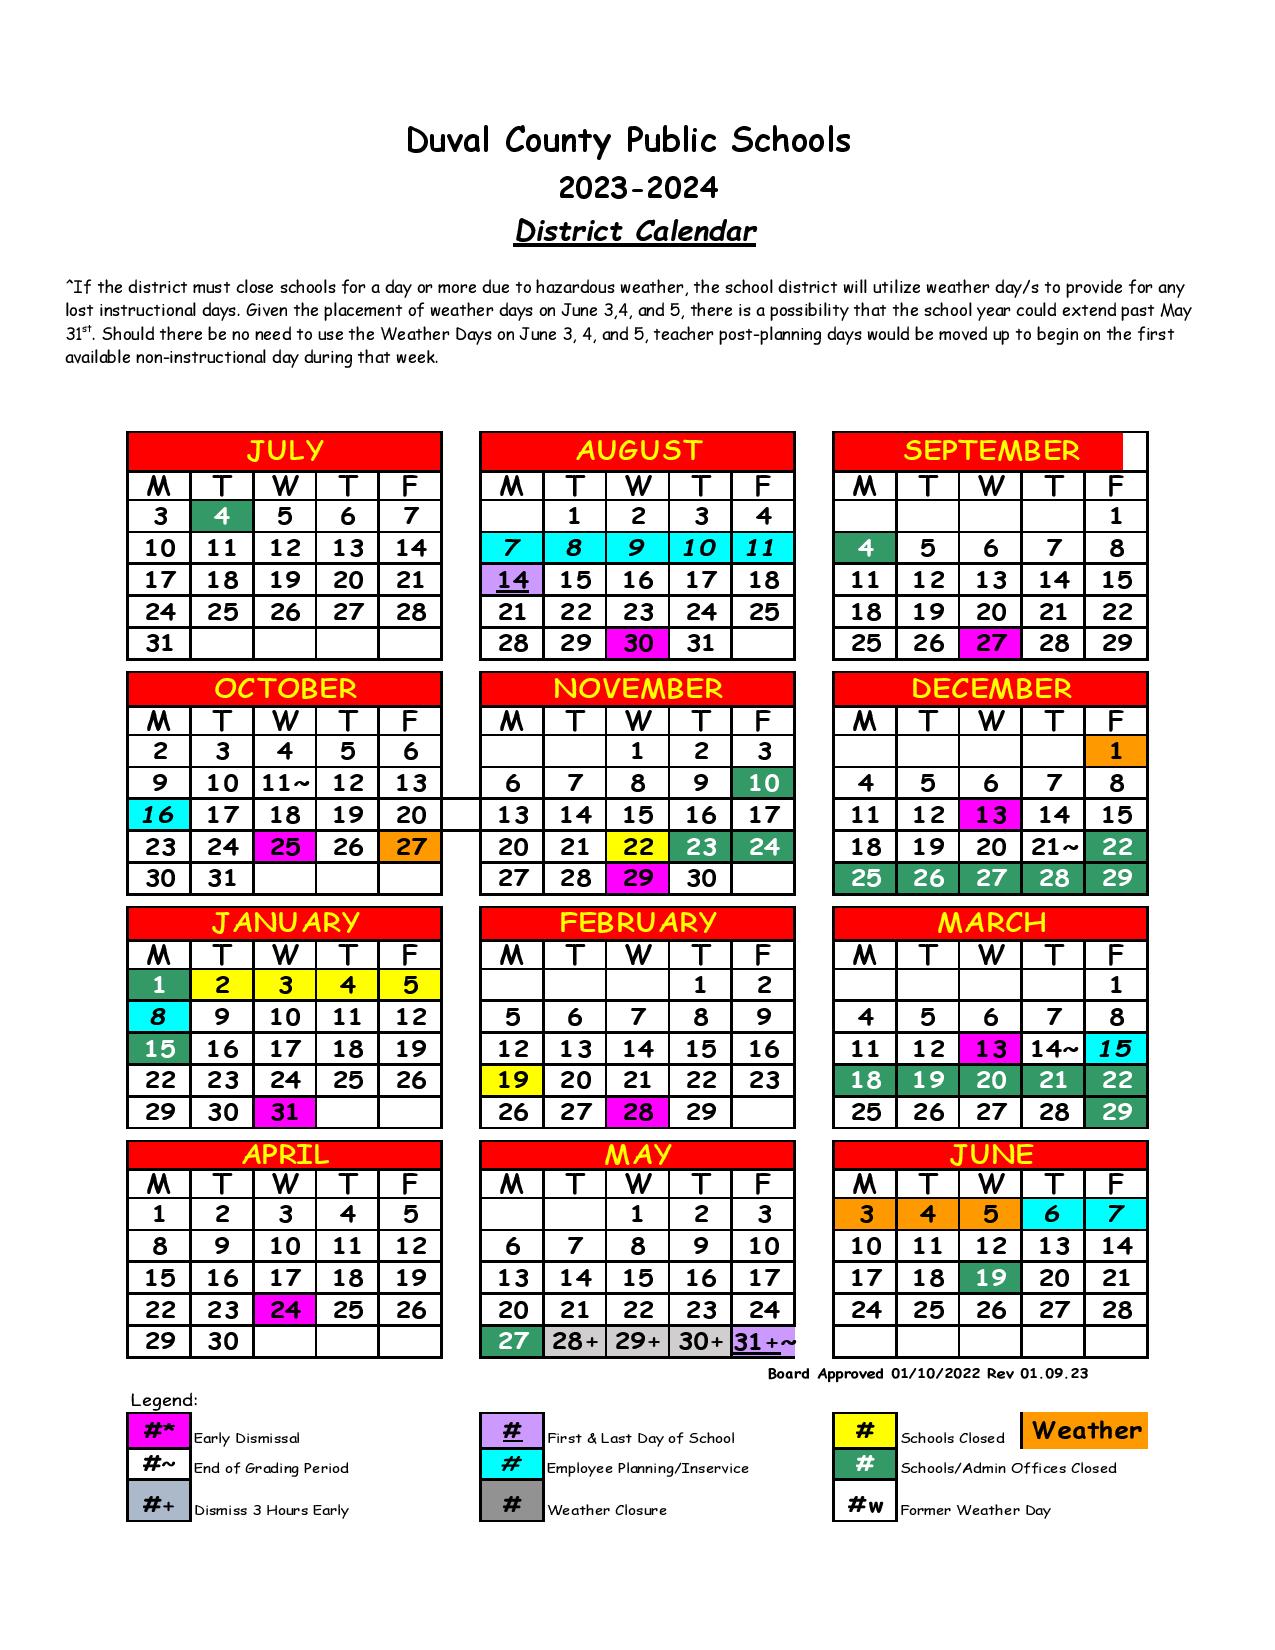 duval-county-public-schools-calendar-2023-2024-holiday-breaks